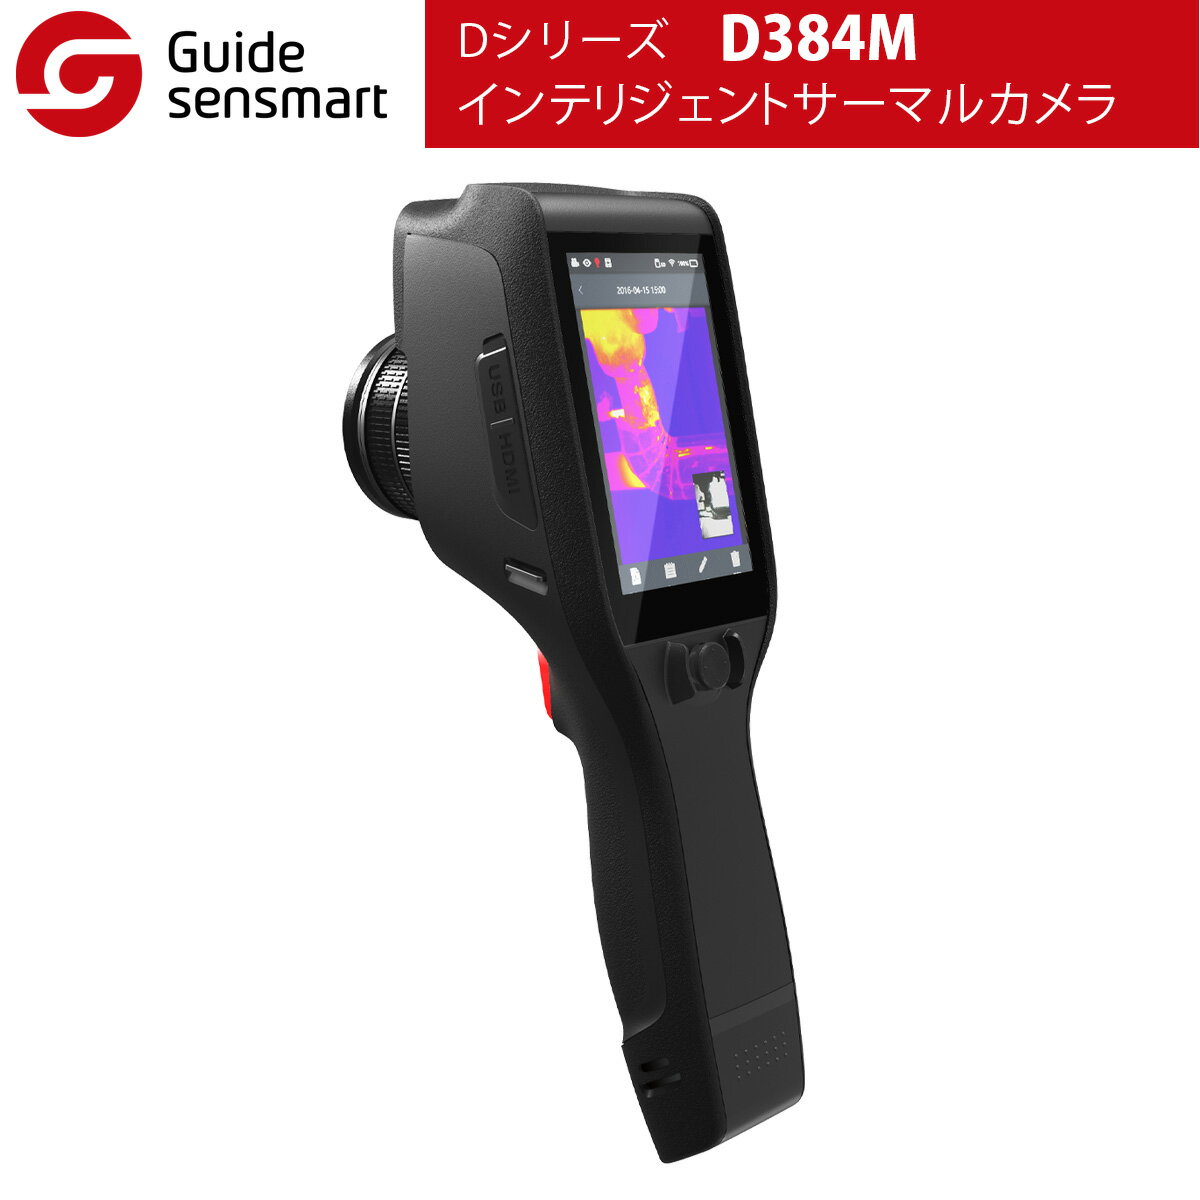 Guide sensmartDシリーズ インテリジェントサーマルカメラ D384M 工業用サーマル温度計 4インチ 高輝度タッチスクリーン Androidオペレーティングシステム イルミネーター搭載 SDカード Wi-Fi通信